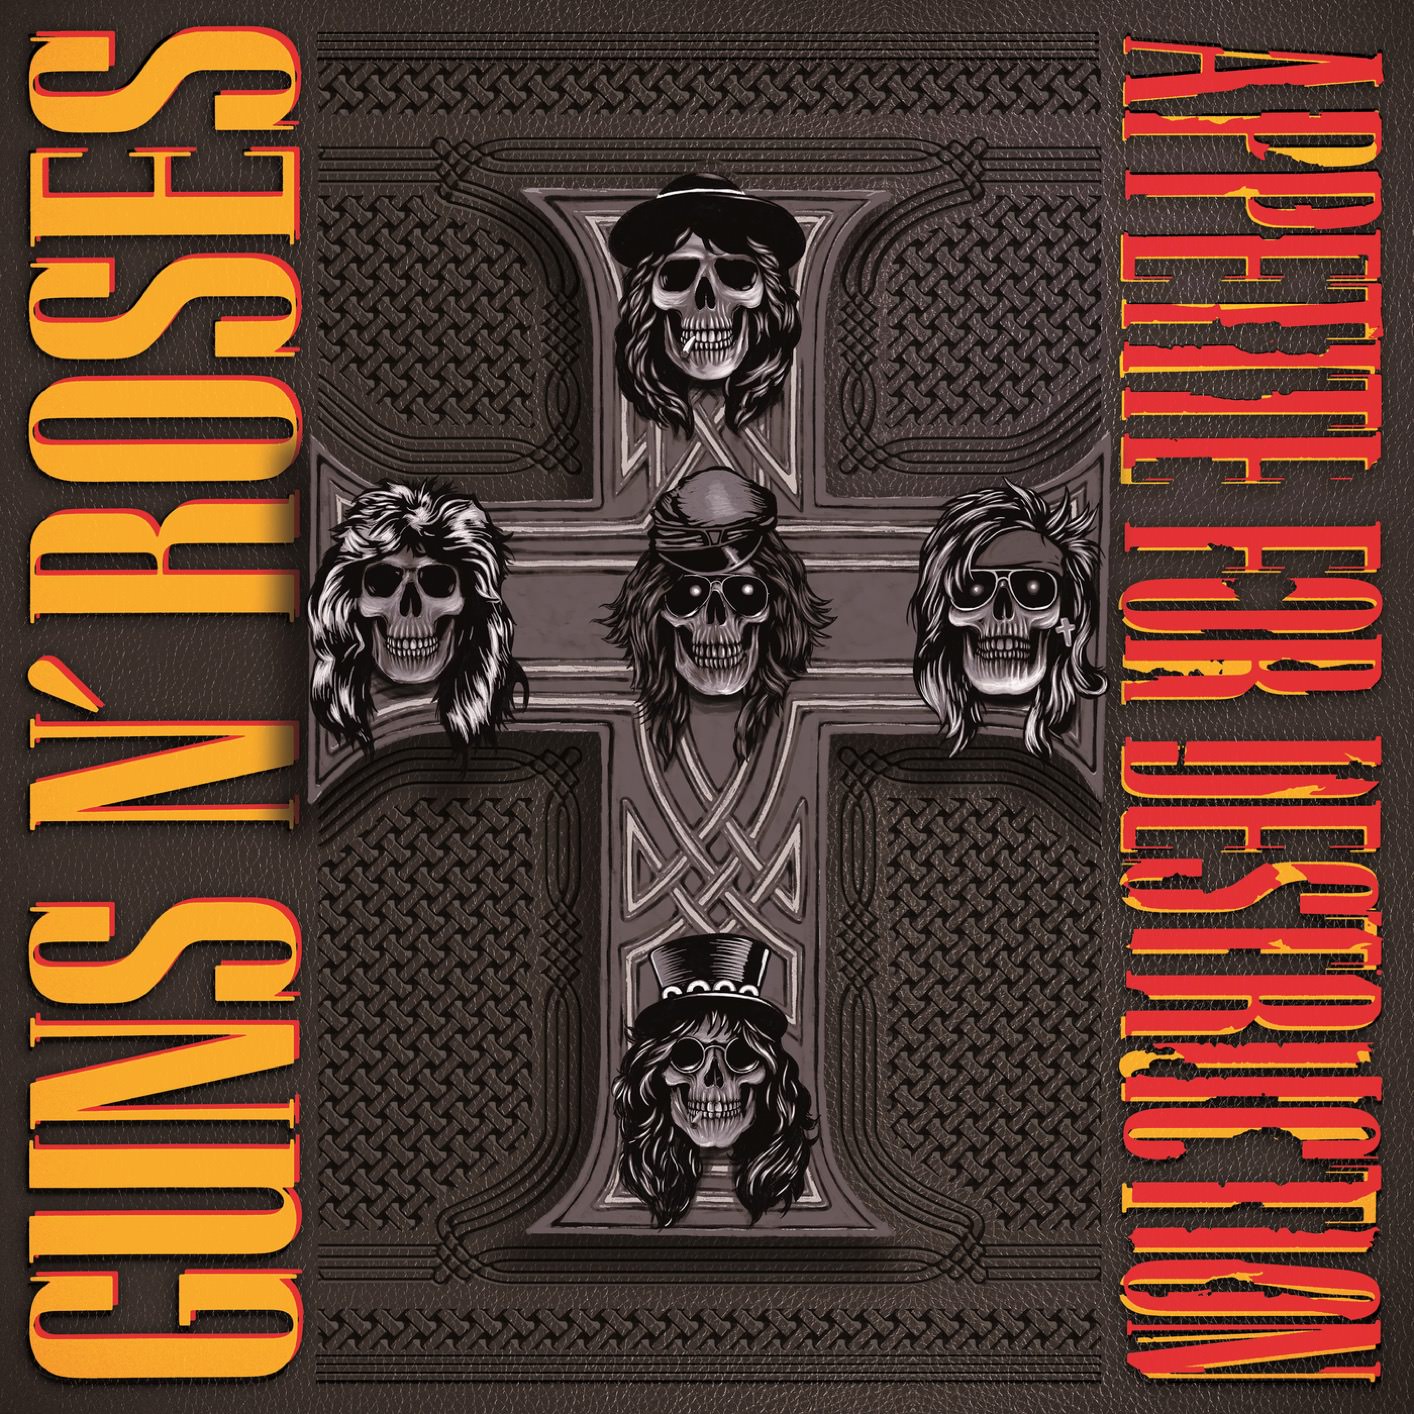 Guns N’ Roses - Appetite For Destruction (Super Deluxe Edition) (1987/2018) [FLAC 24bit/192kHz]